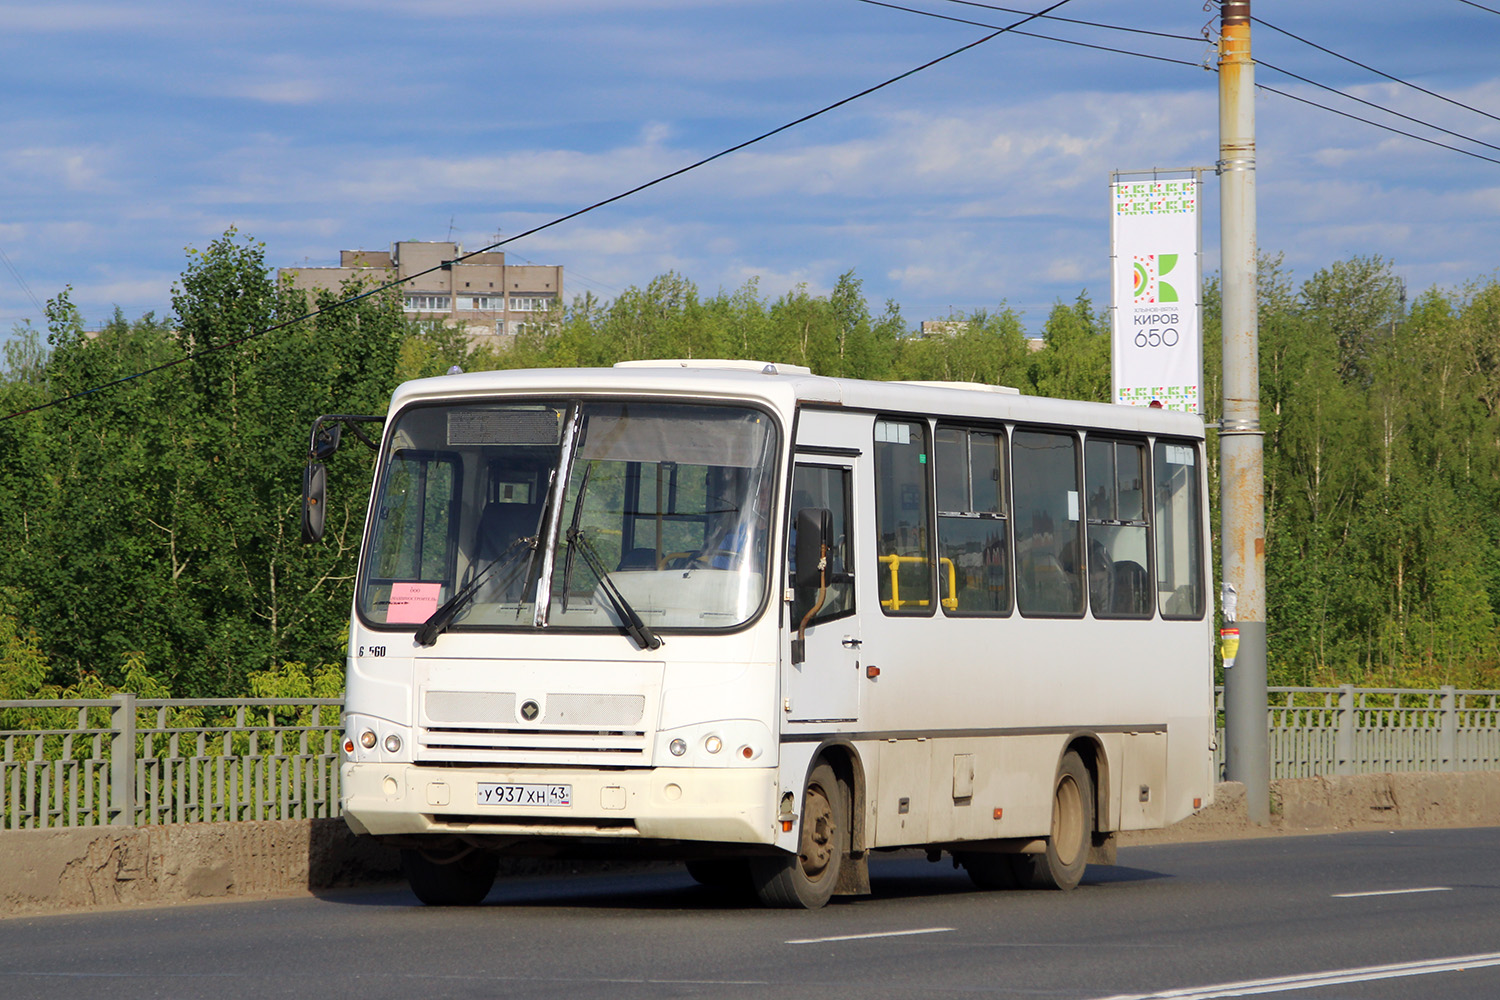 Kirovi terület, PAZ-320402-05 sz.: У 937 ХН 43